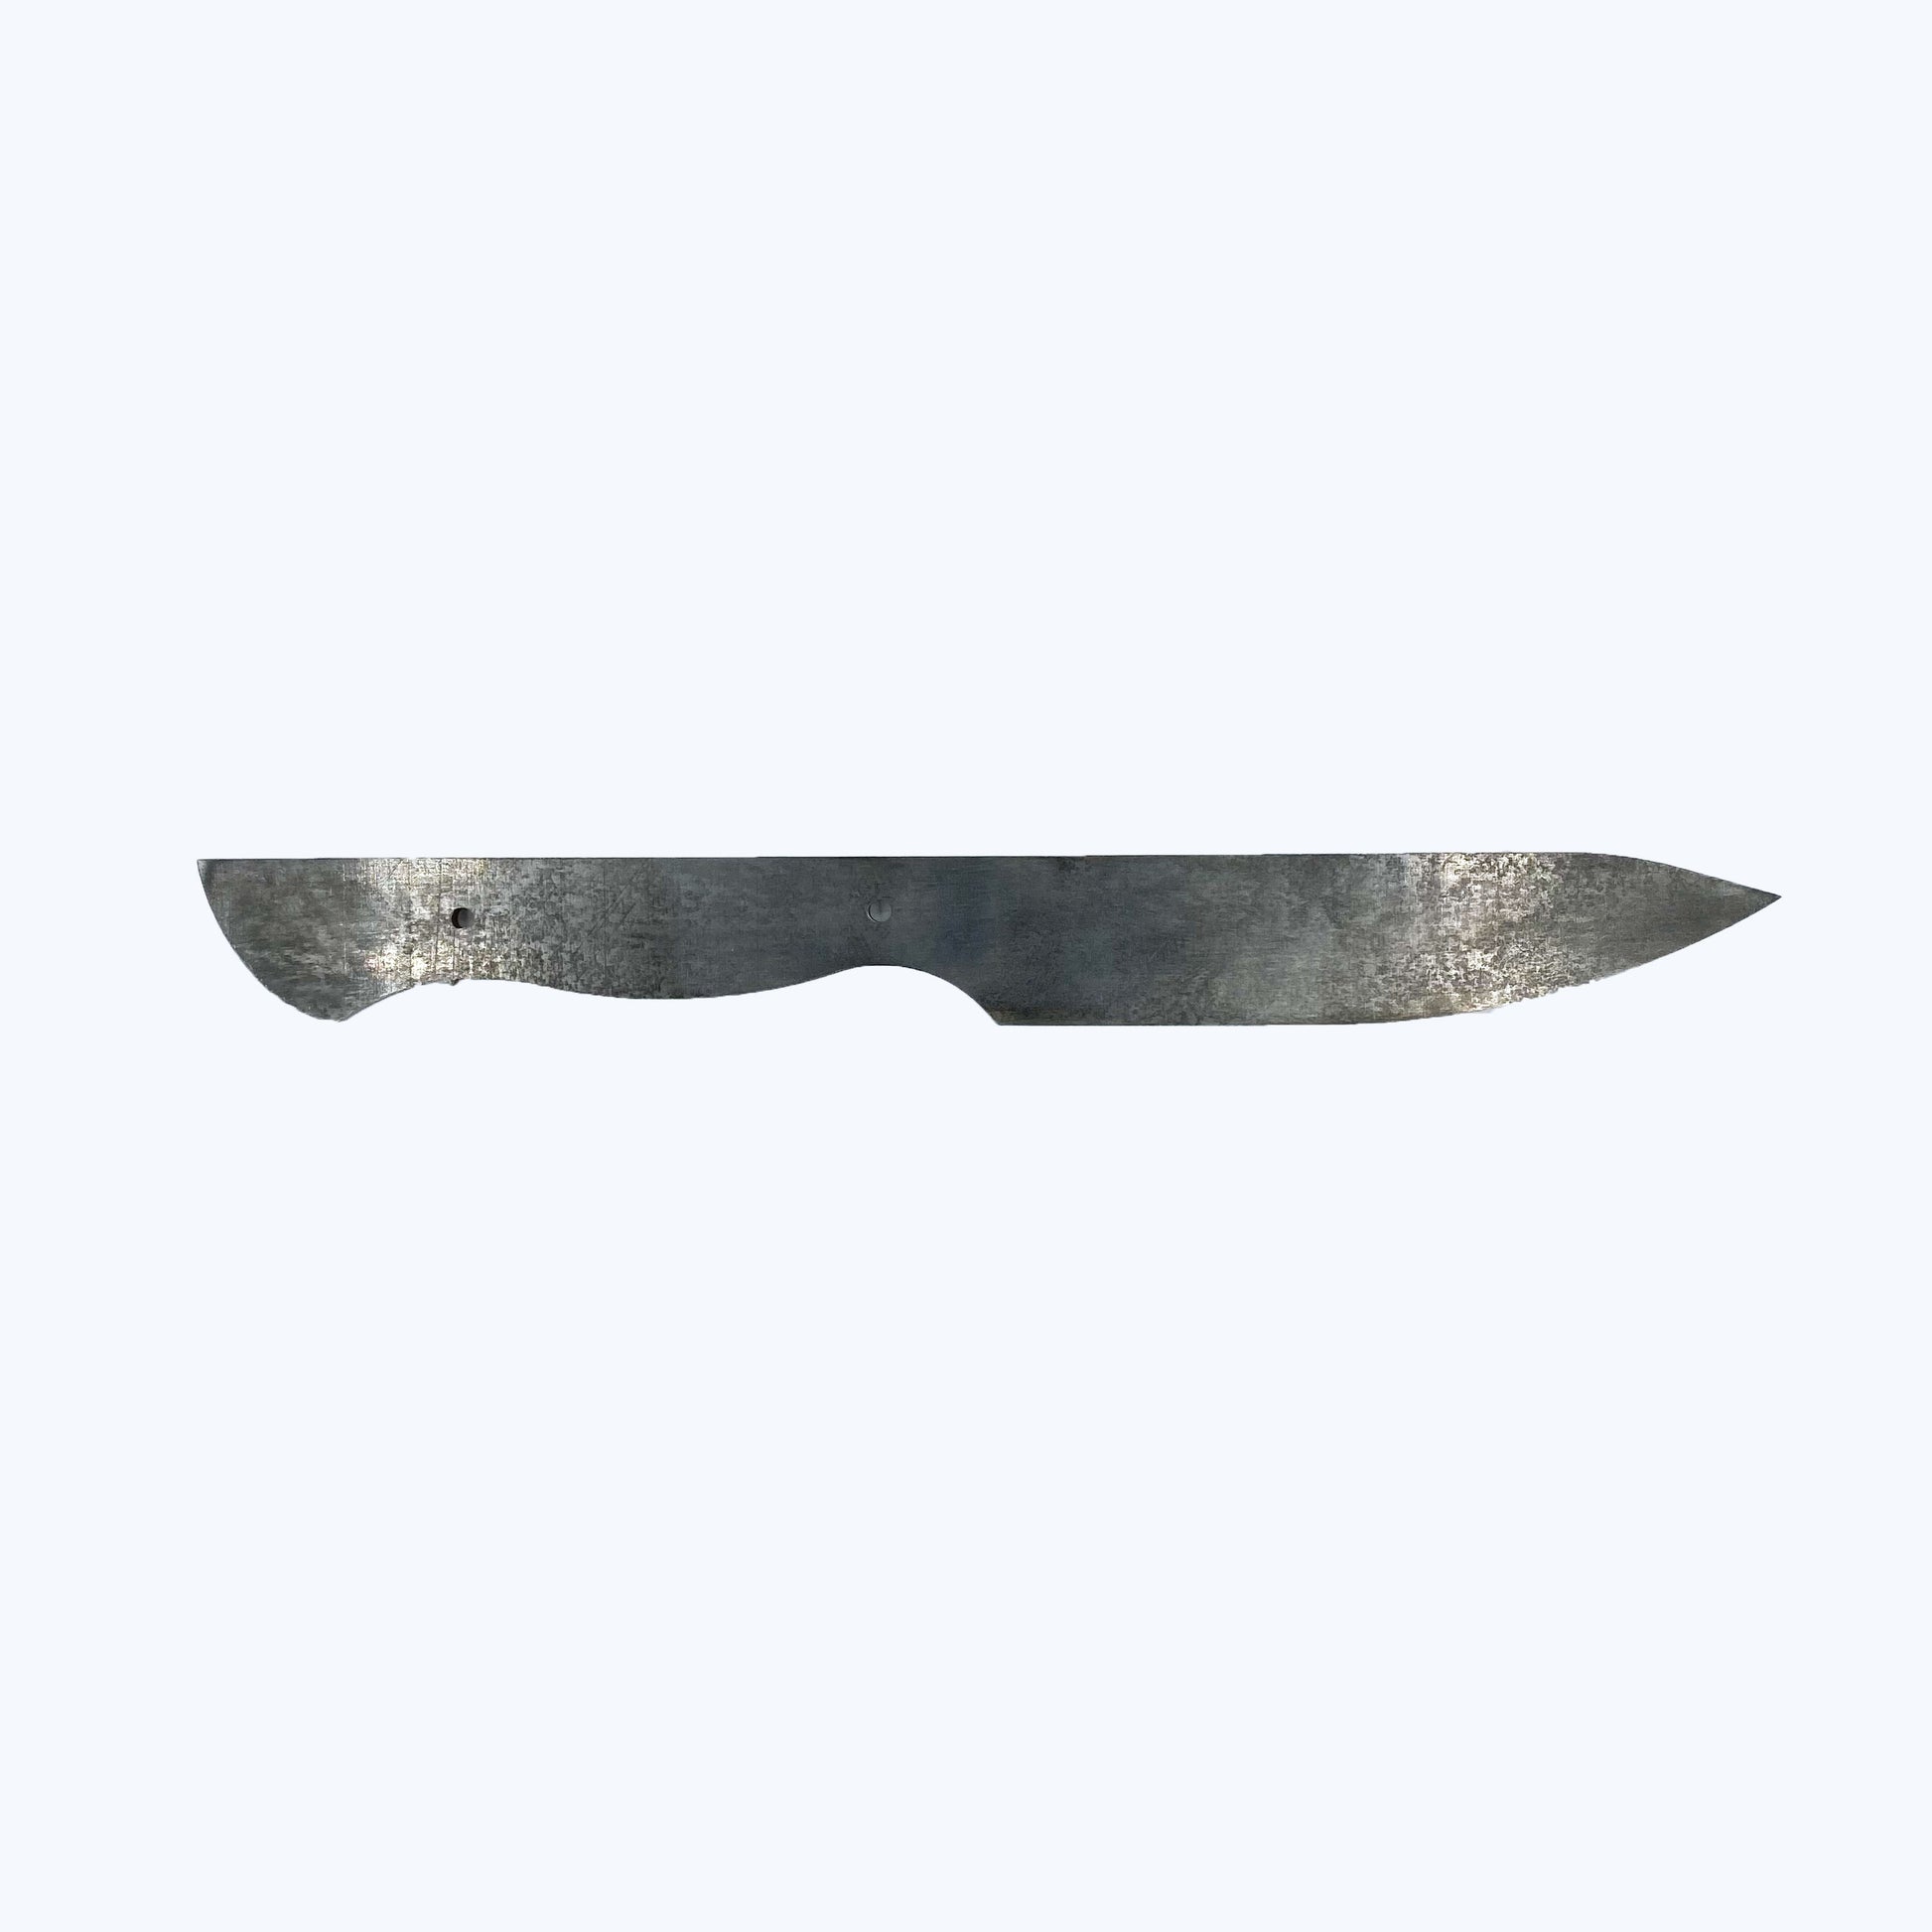 Paring Knife - Patrick Adair Supplies